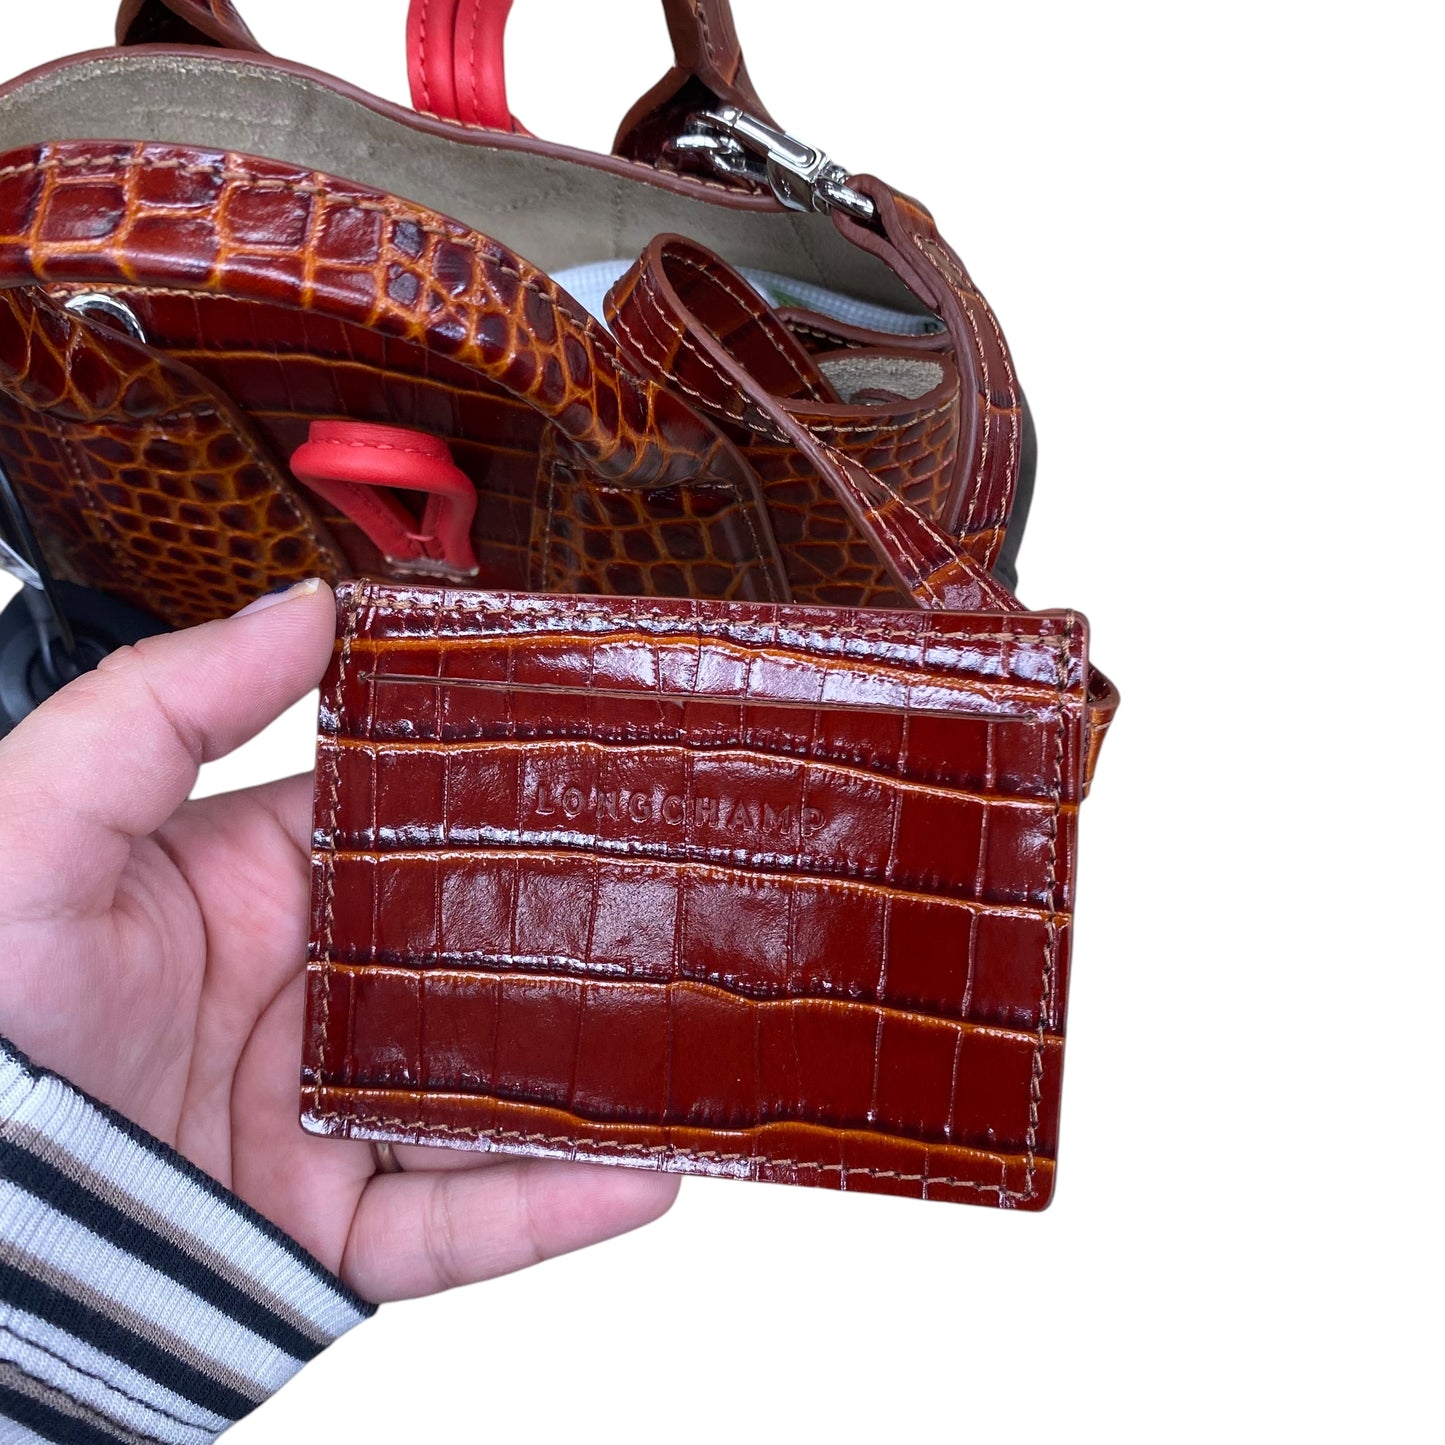 Handbag Luxury Designer By Longchamp  Size: Small